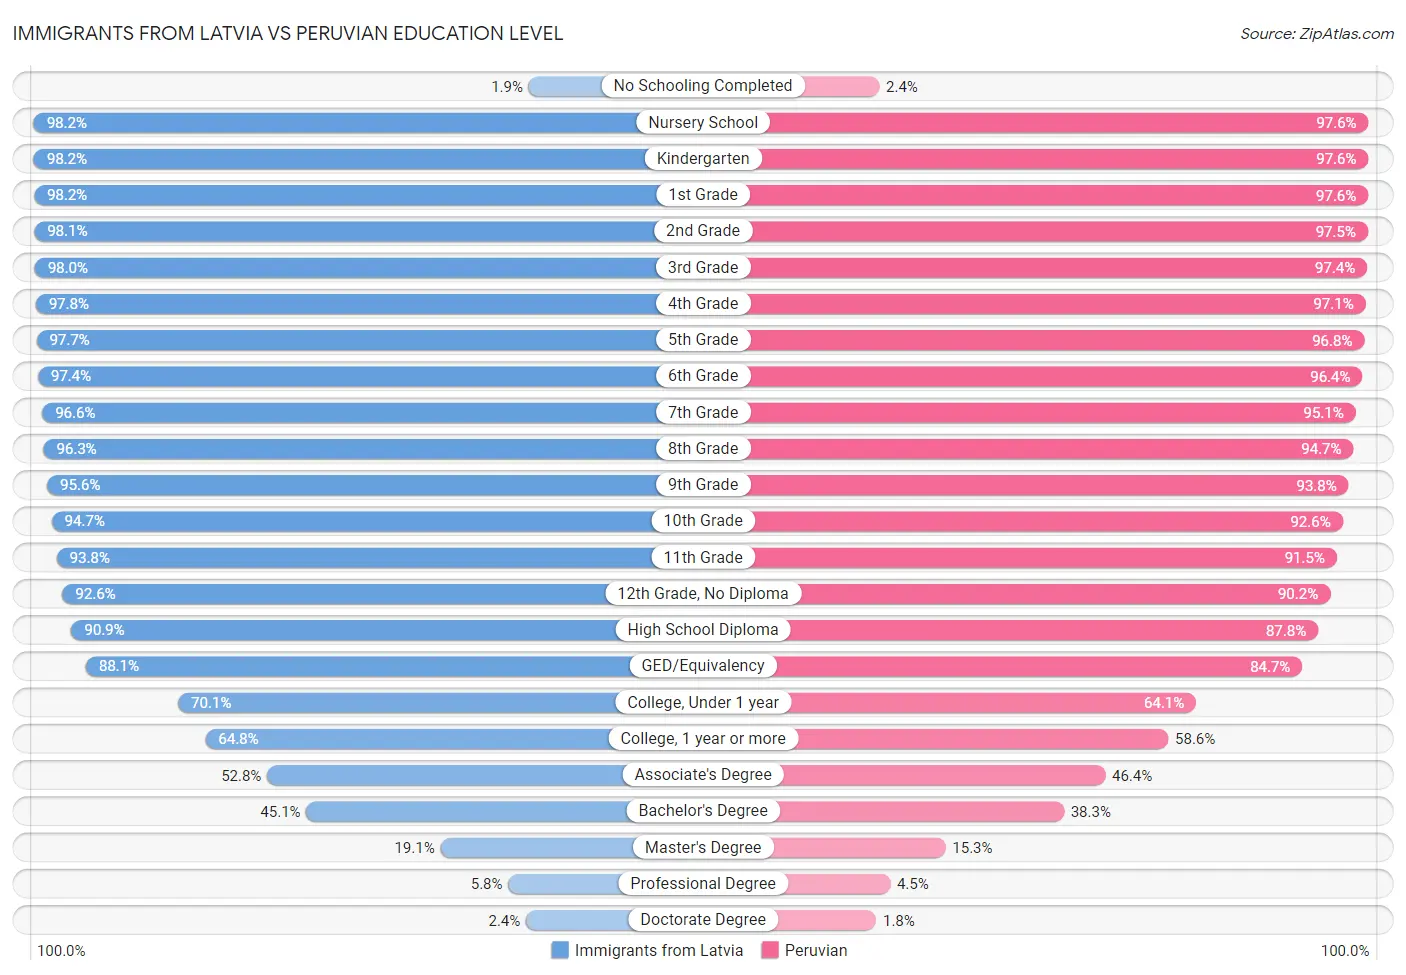 Immigrants from Latvia vs Peruvian Education Level